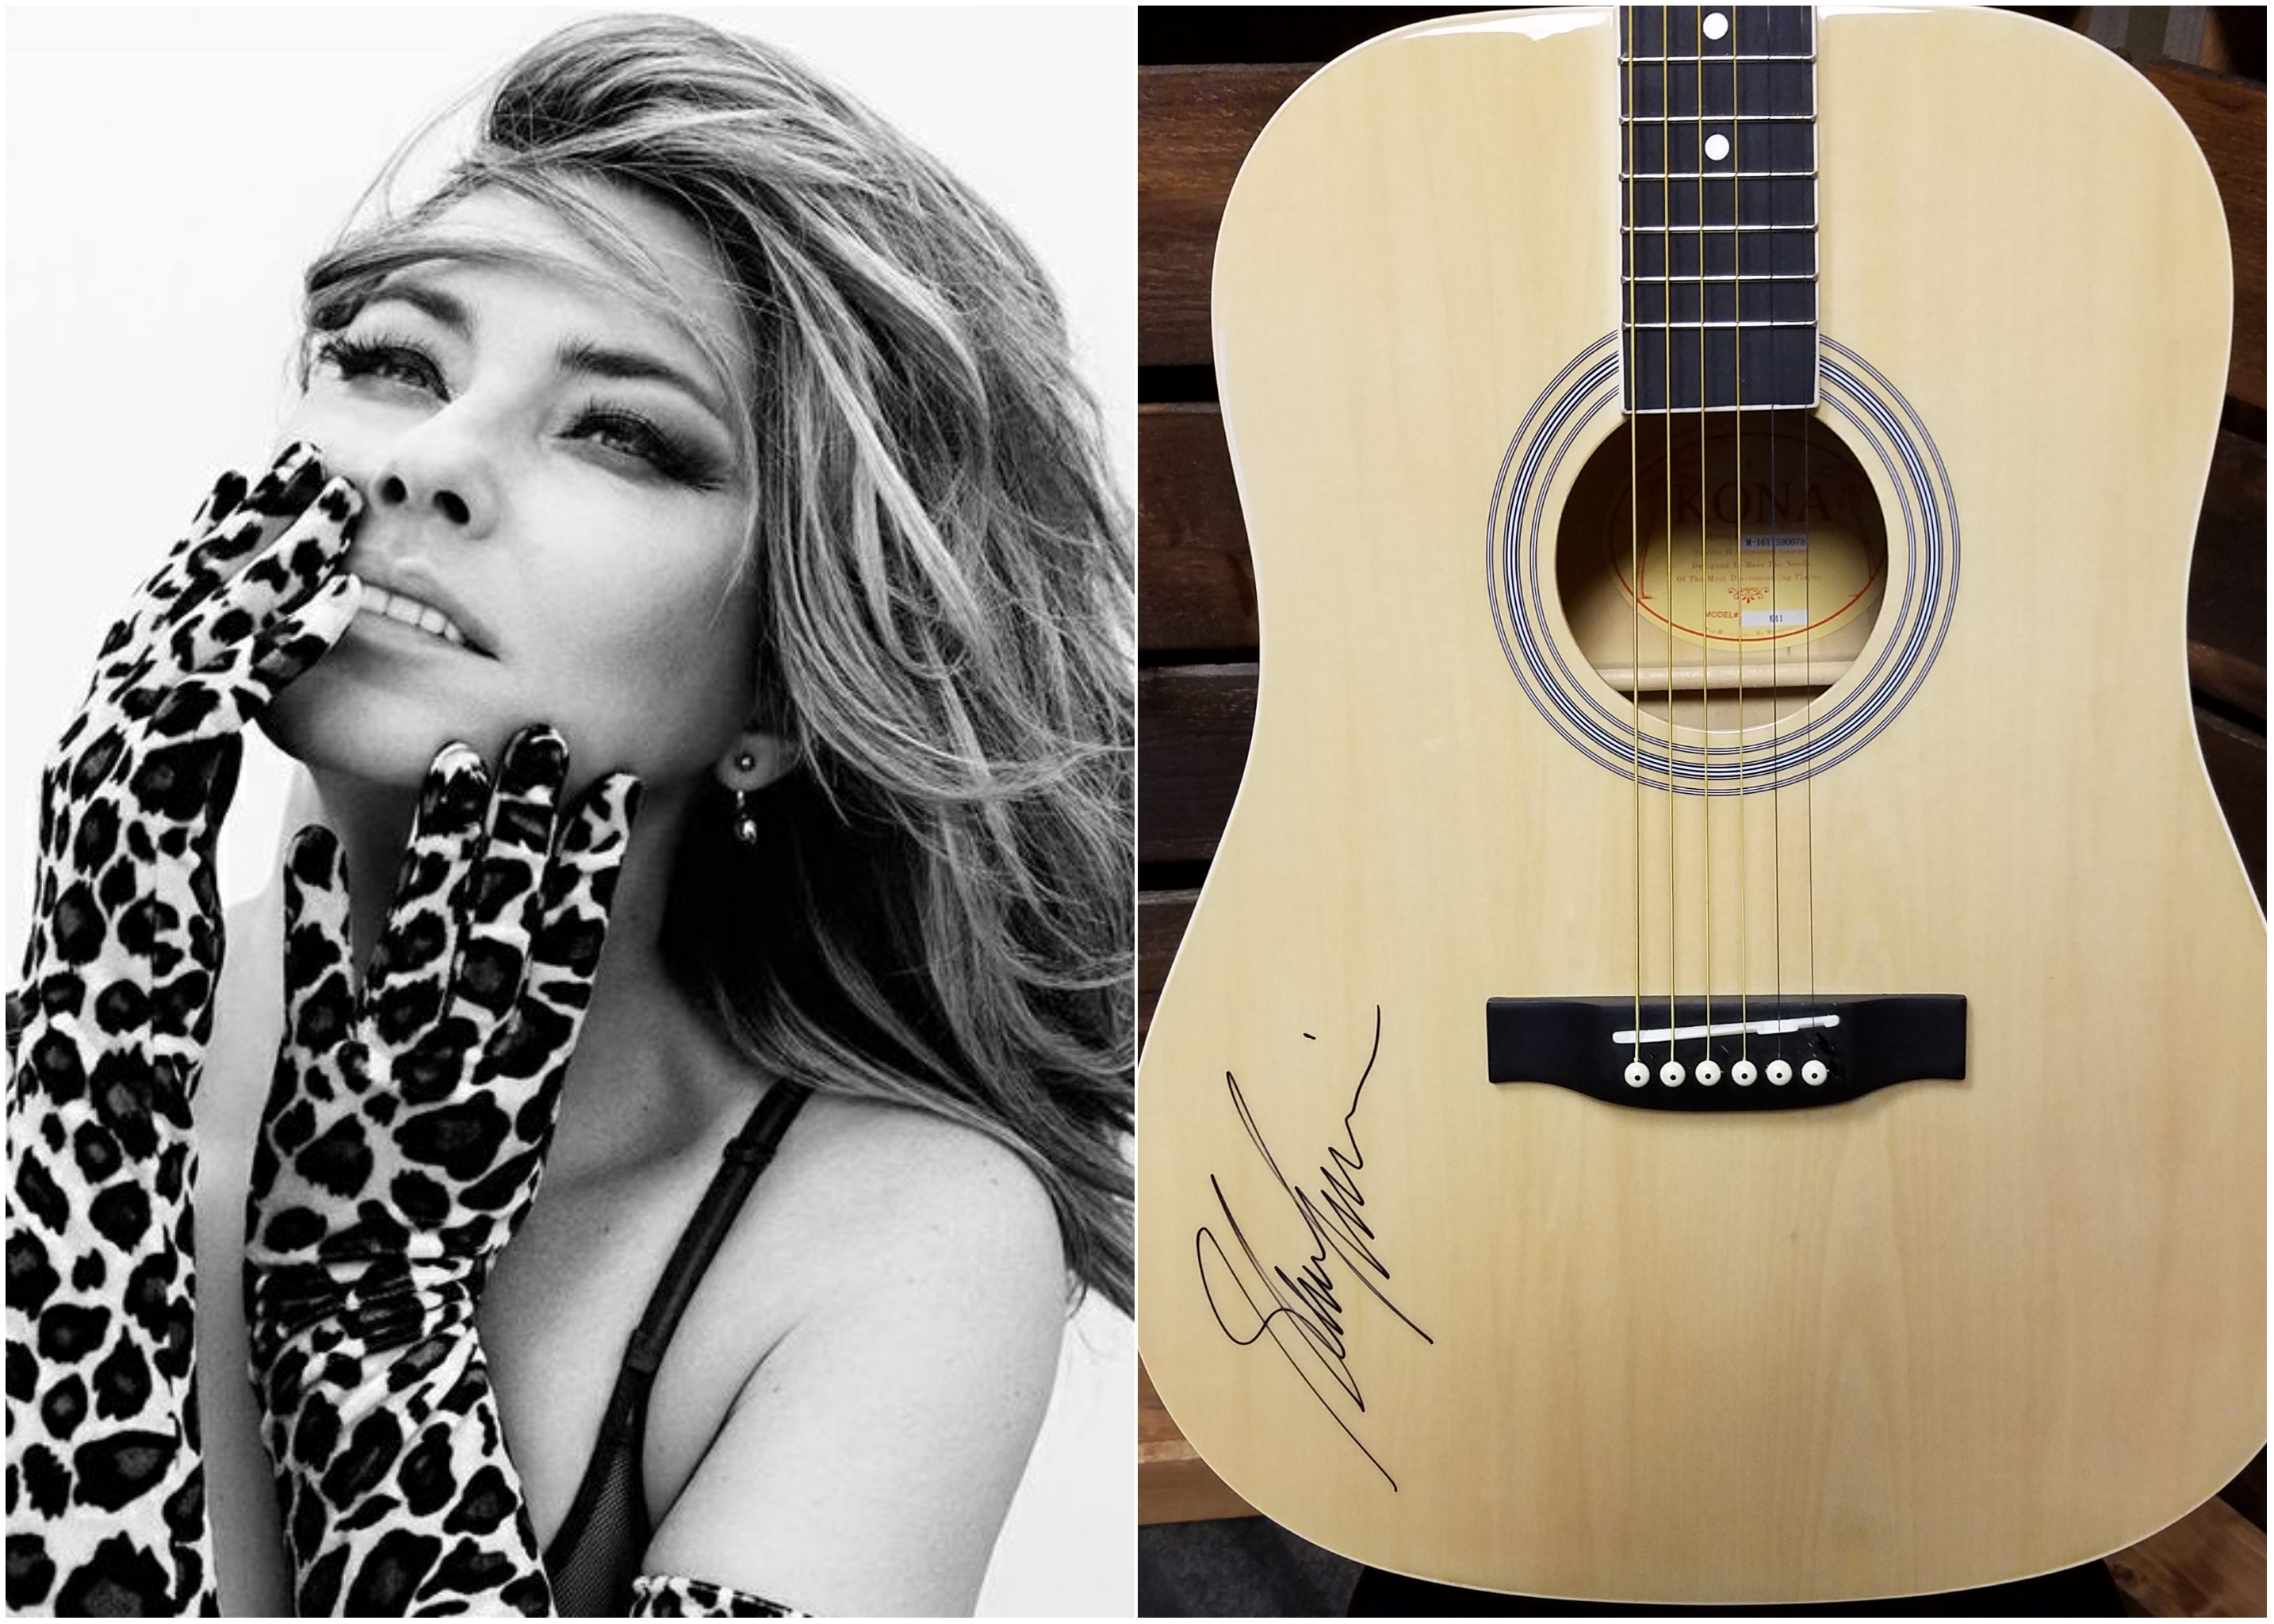 WIN a Guitar Autographed by Shania Twain